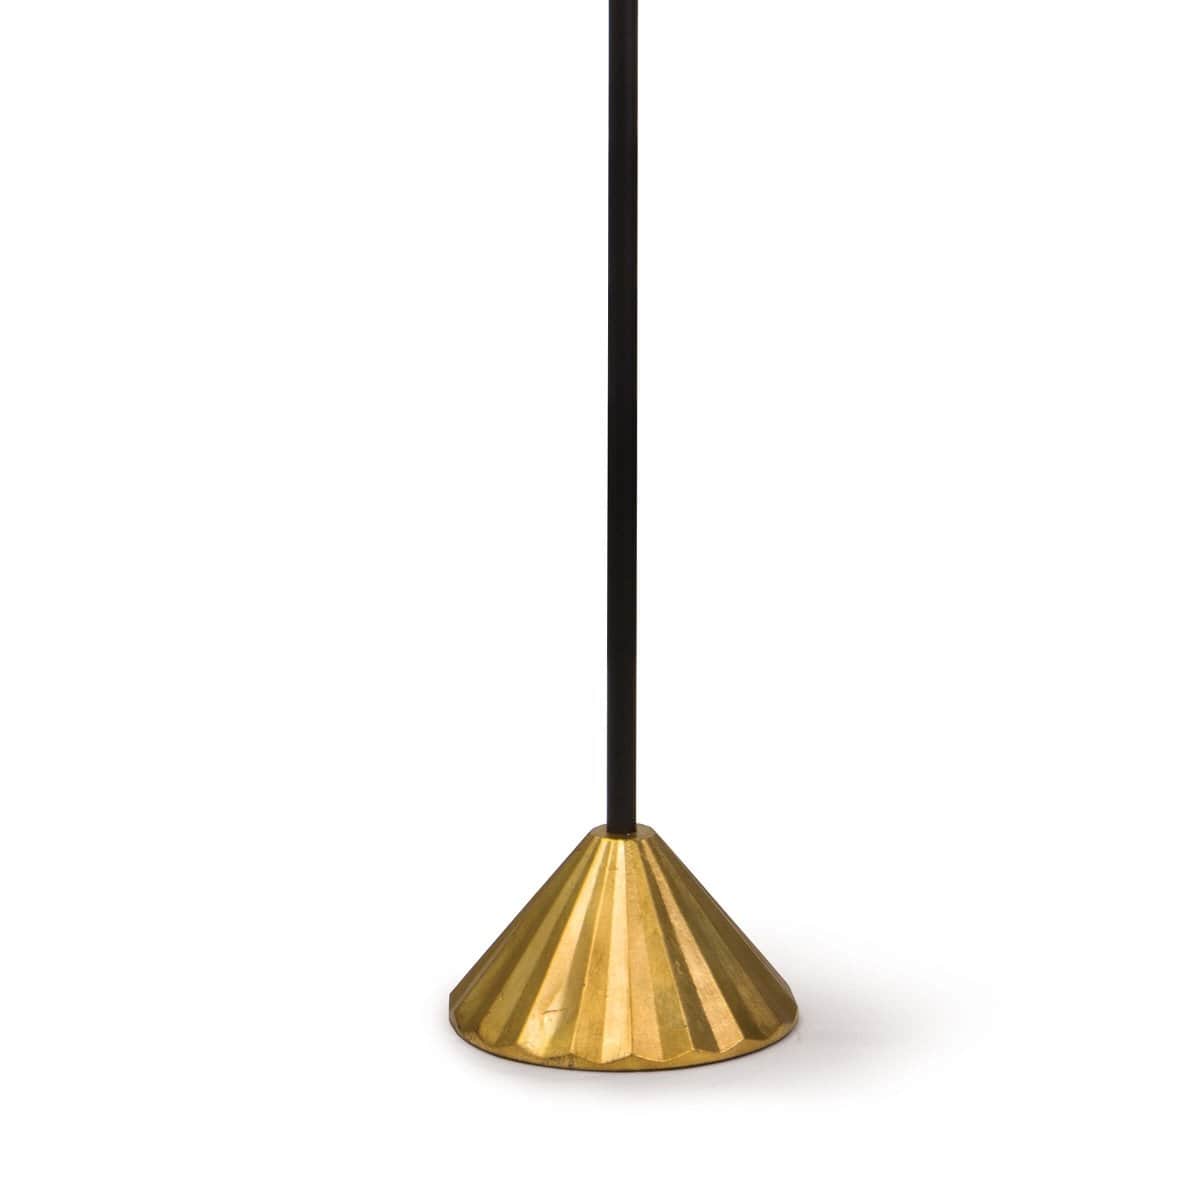 Regina Andrew Parasol Floor Lamp Lighting regina-andrew-14-1033 00844717092596